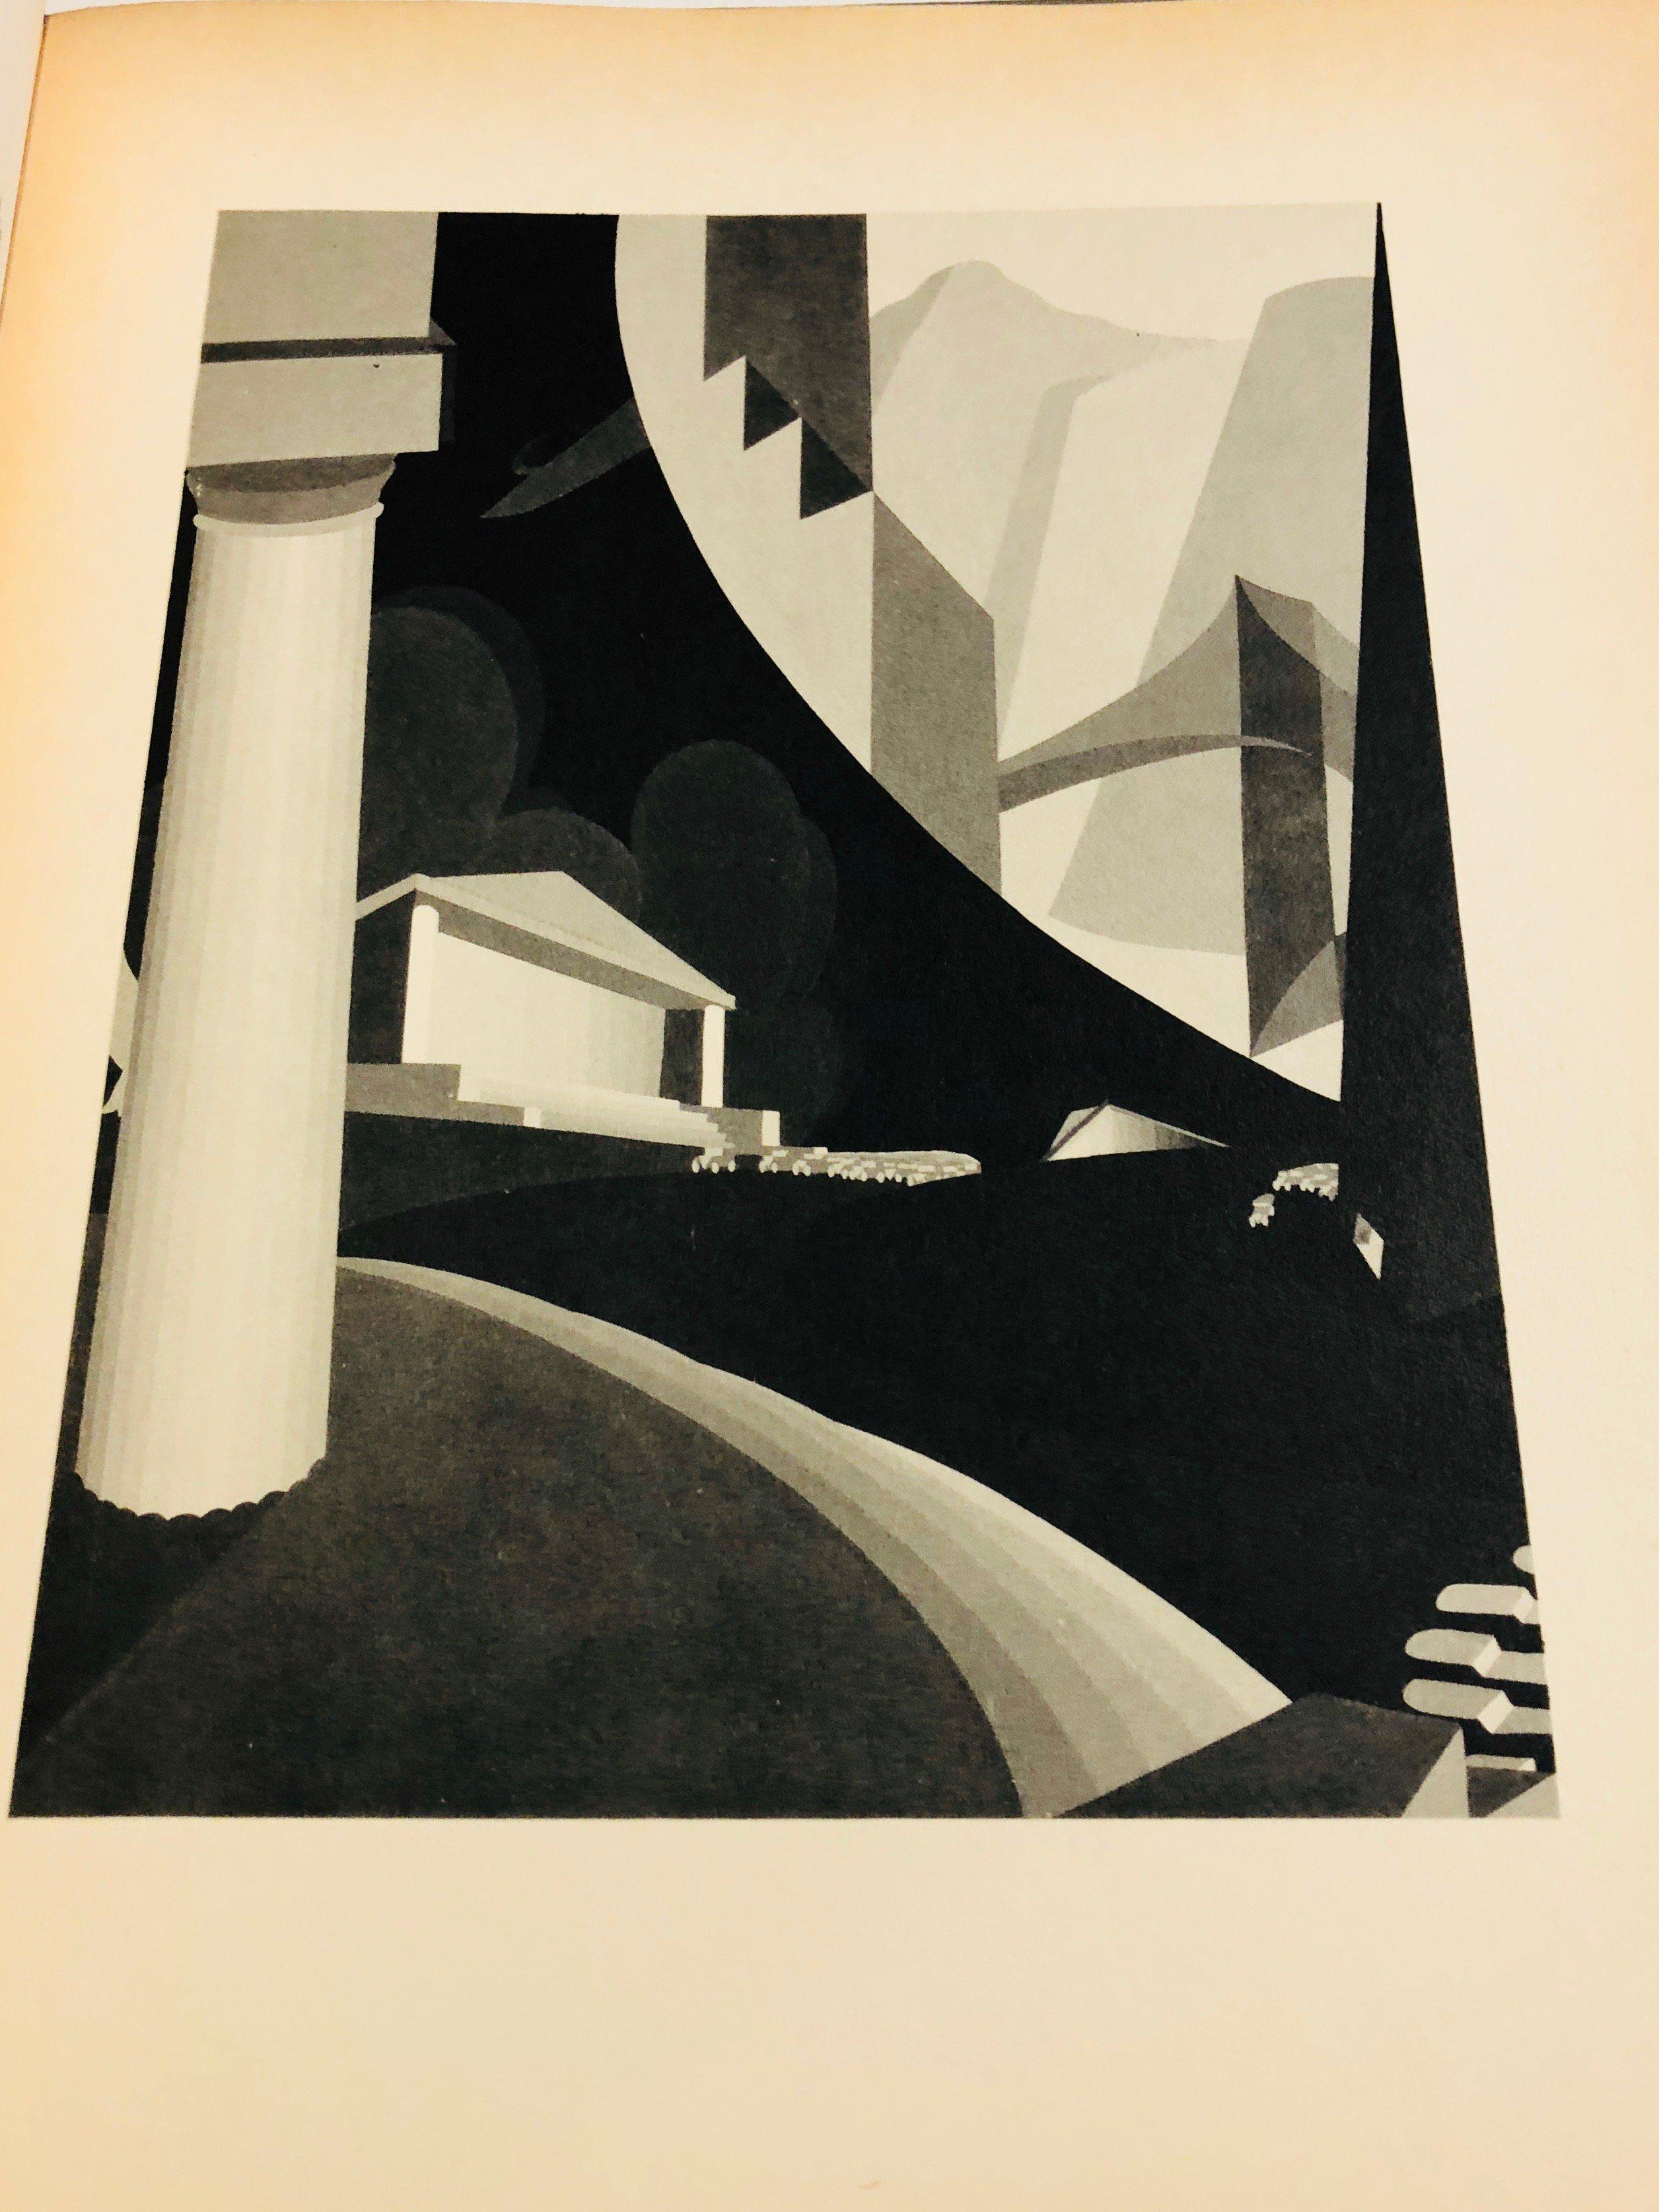 Contempo: This American Tempo by JOHN VASSOS (1929) American Art-Deco Modernistic Style